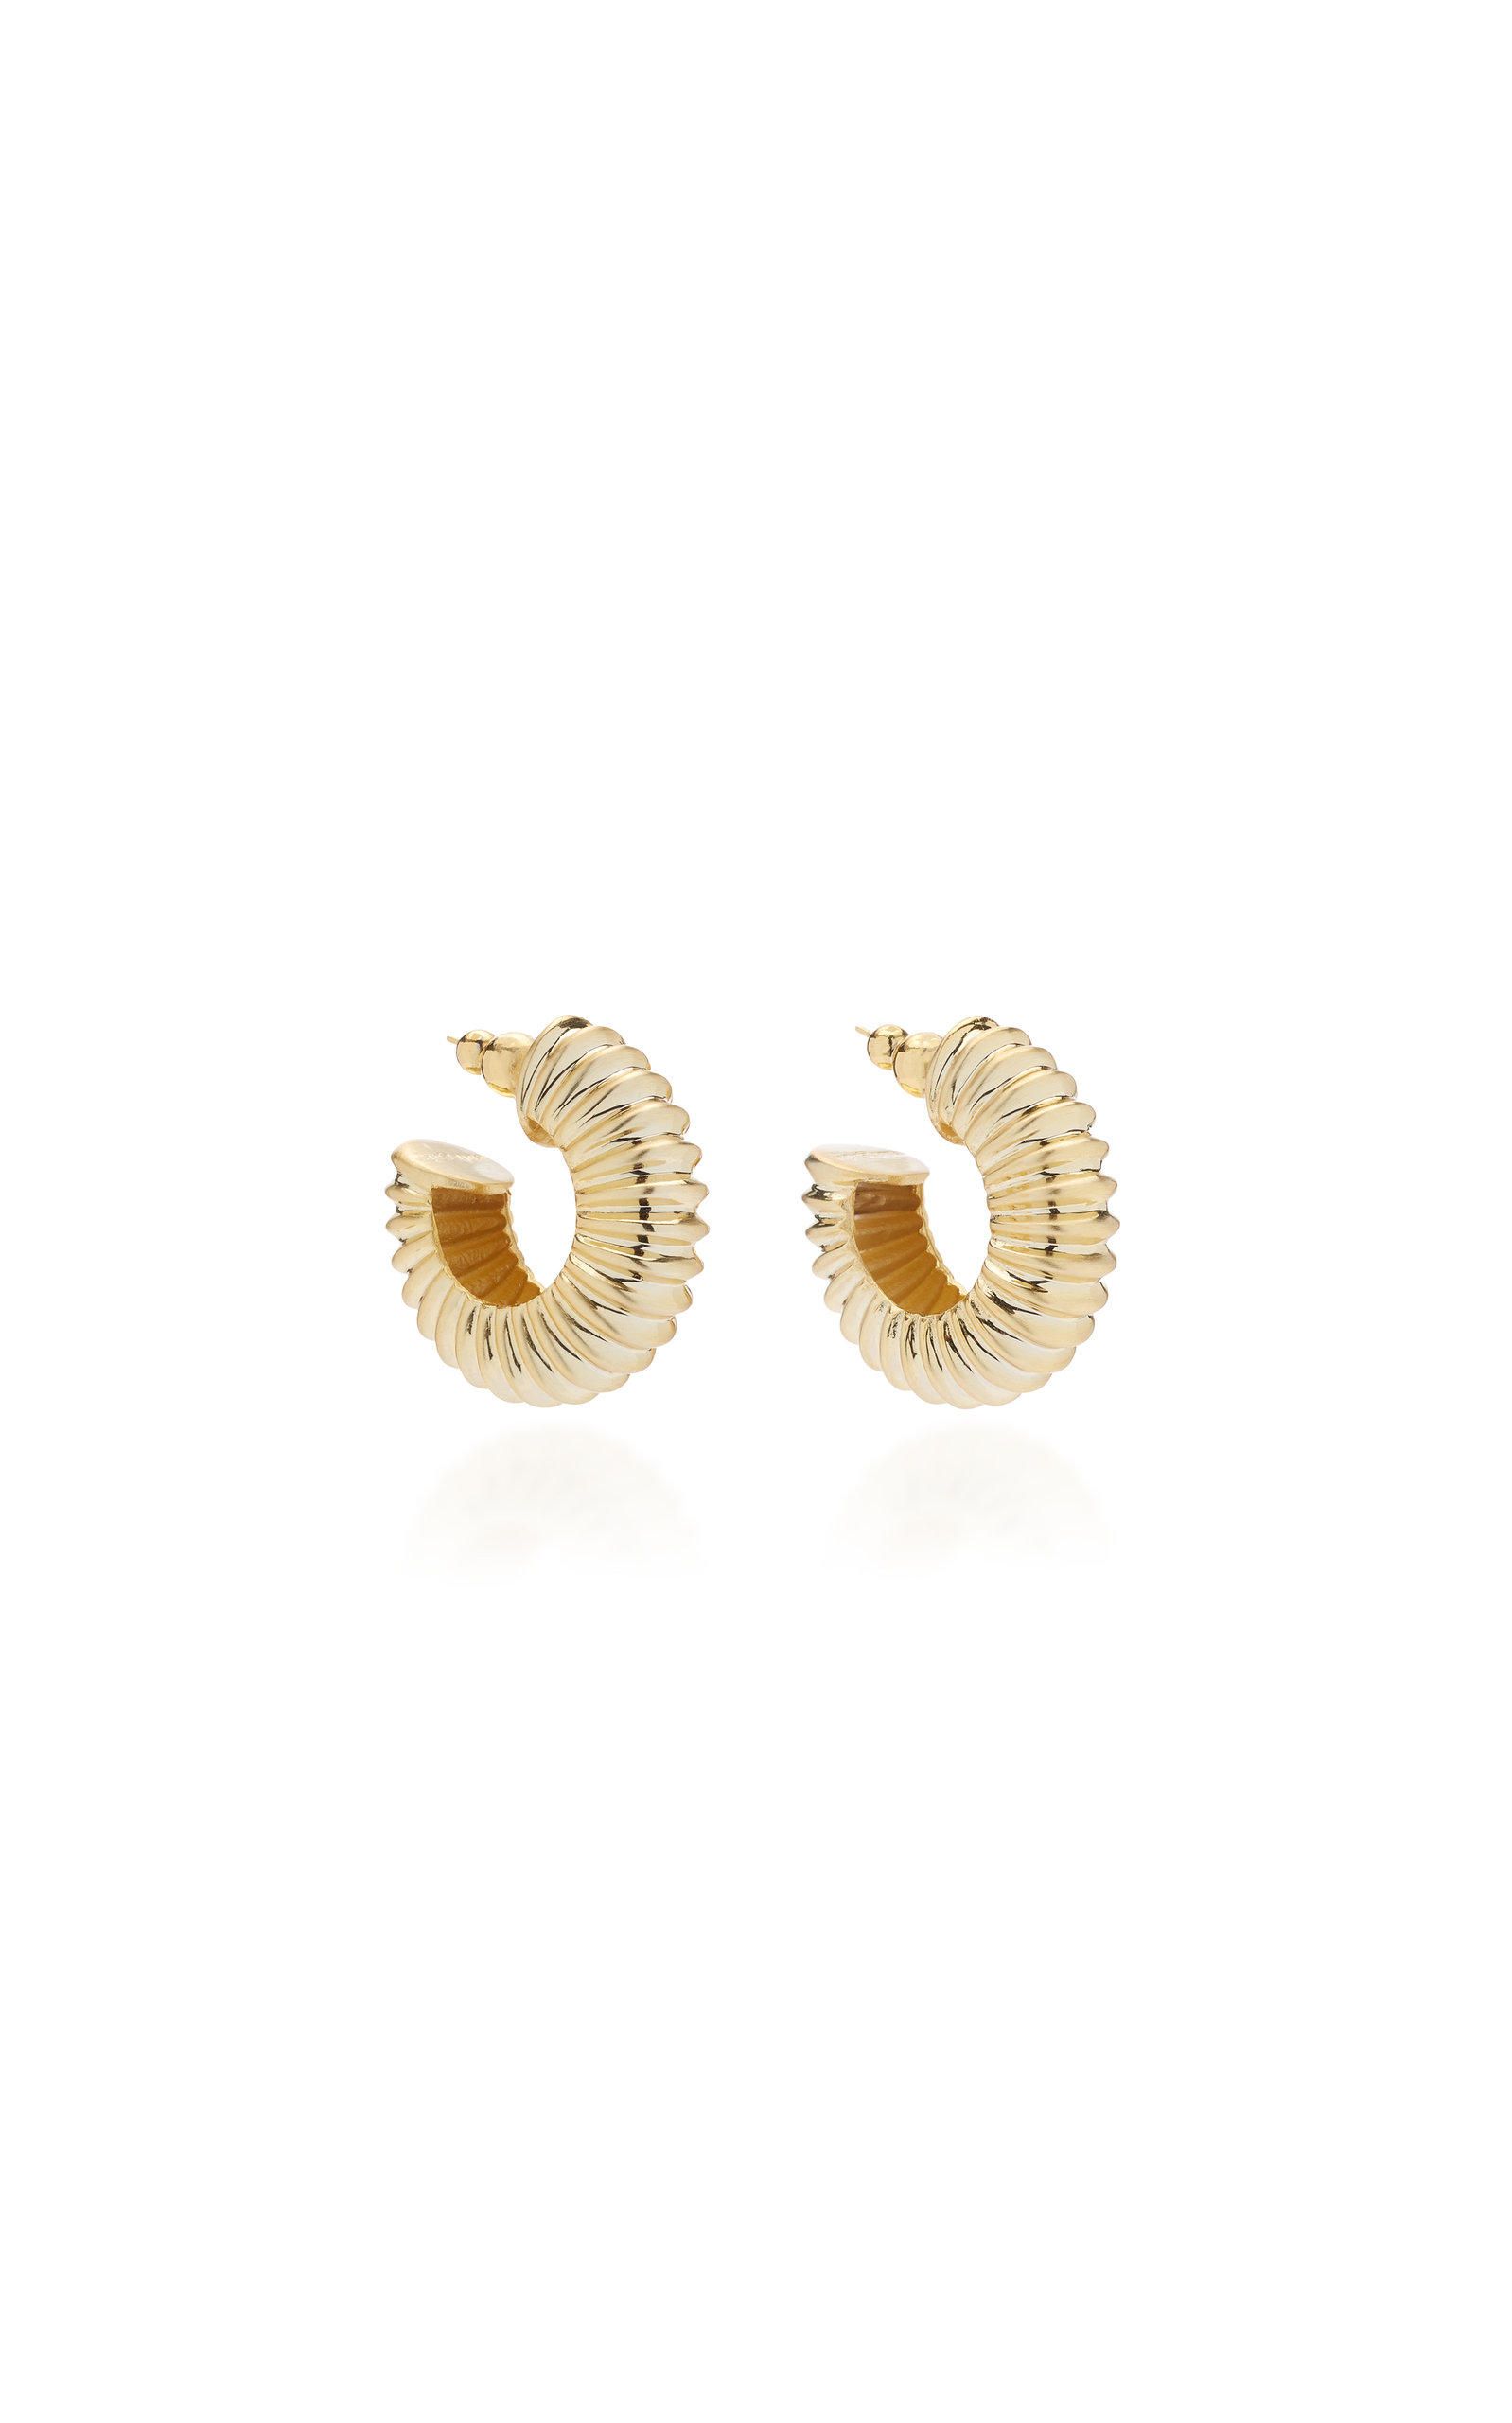 Cult Gaia - Women's Stella Gold-Tone Earrings - Gold - Moda Operandi - Gifts For Her